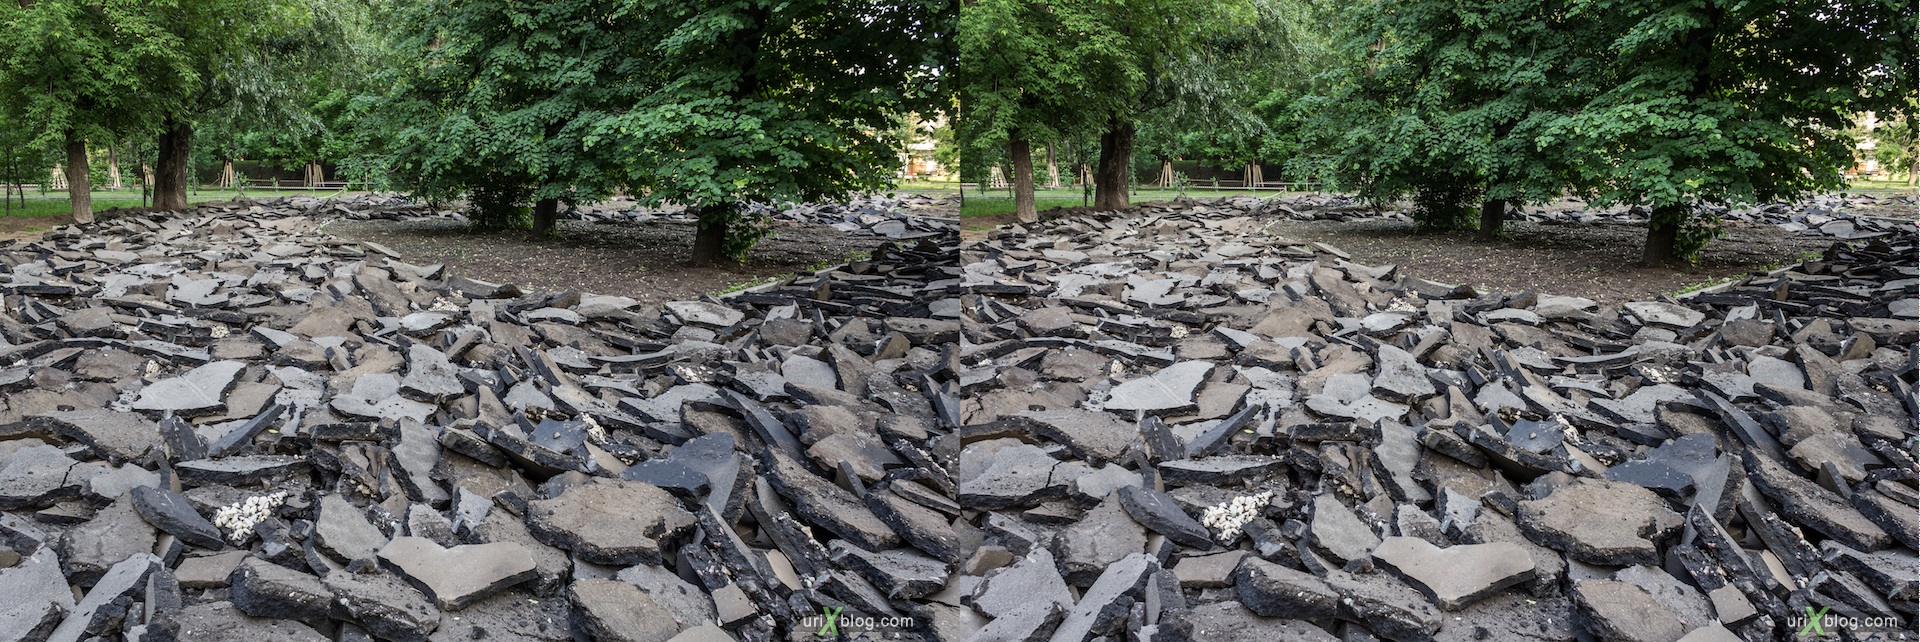 2013, Vojkovskaya, asphalt, park, trees, Moscow, Russia, 3D, stereo pair, cross-eyed, crossview, cross view stereo pair, stereoscopic